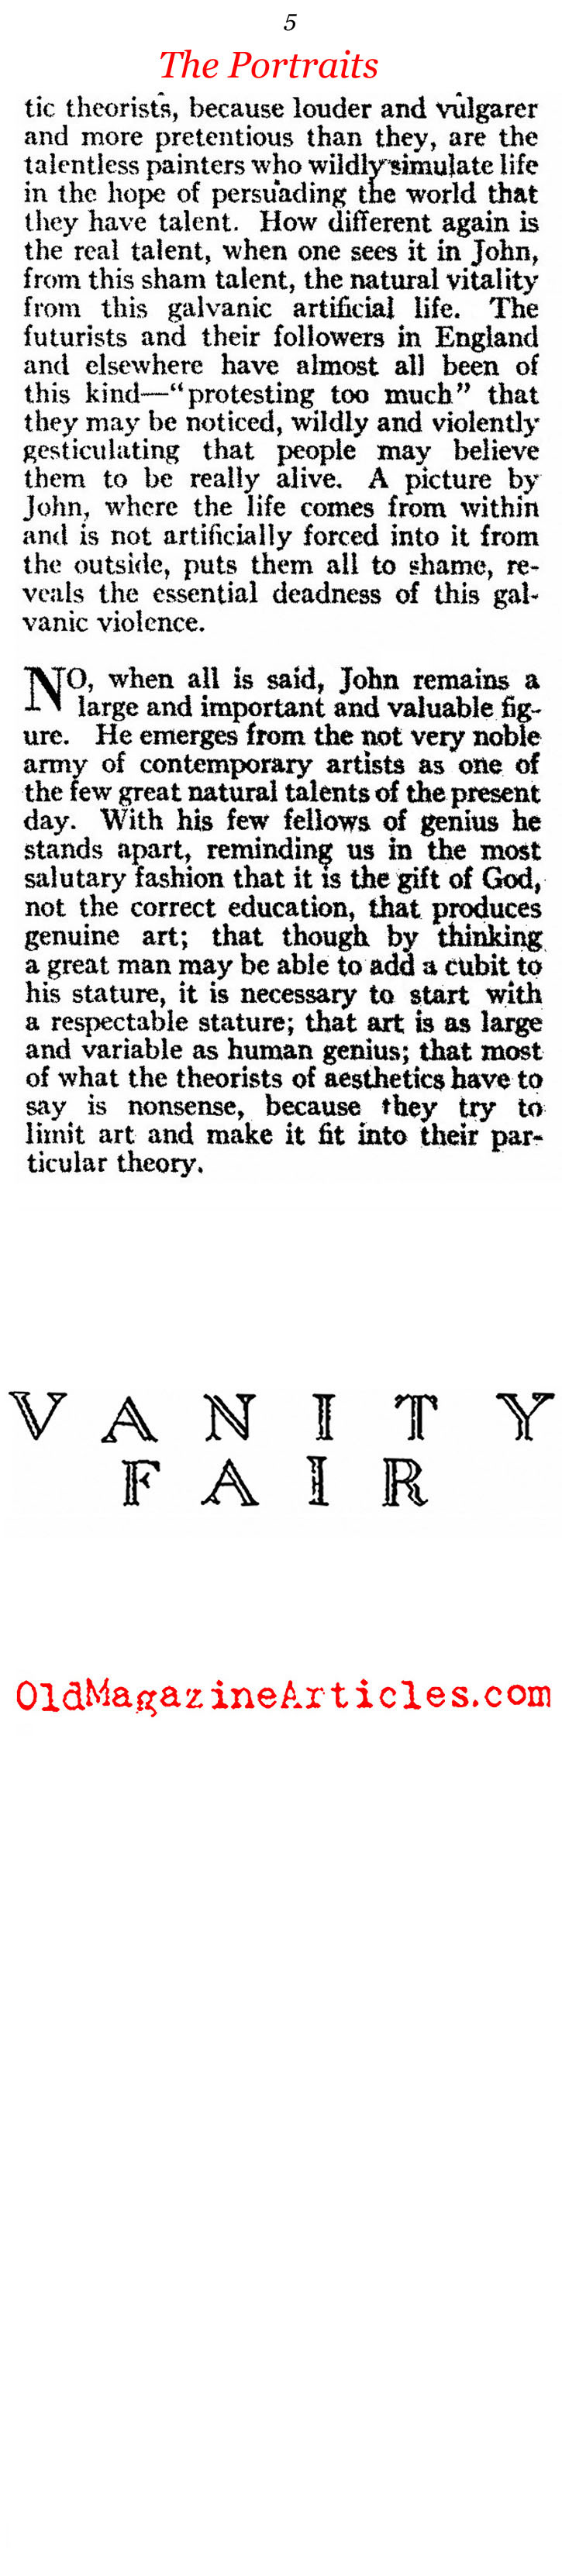 Augustus John by Aldous Huxley  (Vanity Fair Magazine, Undated)